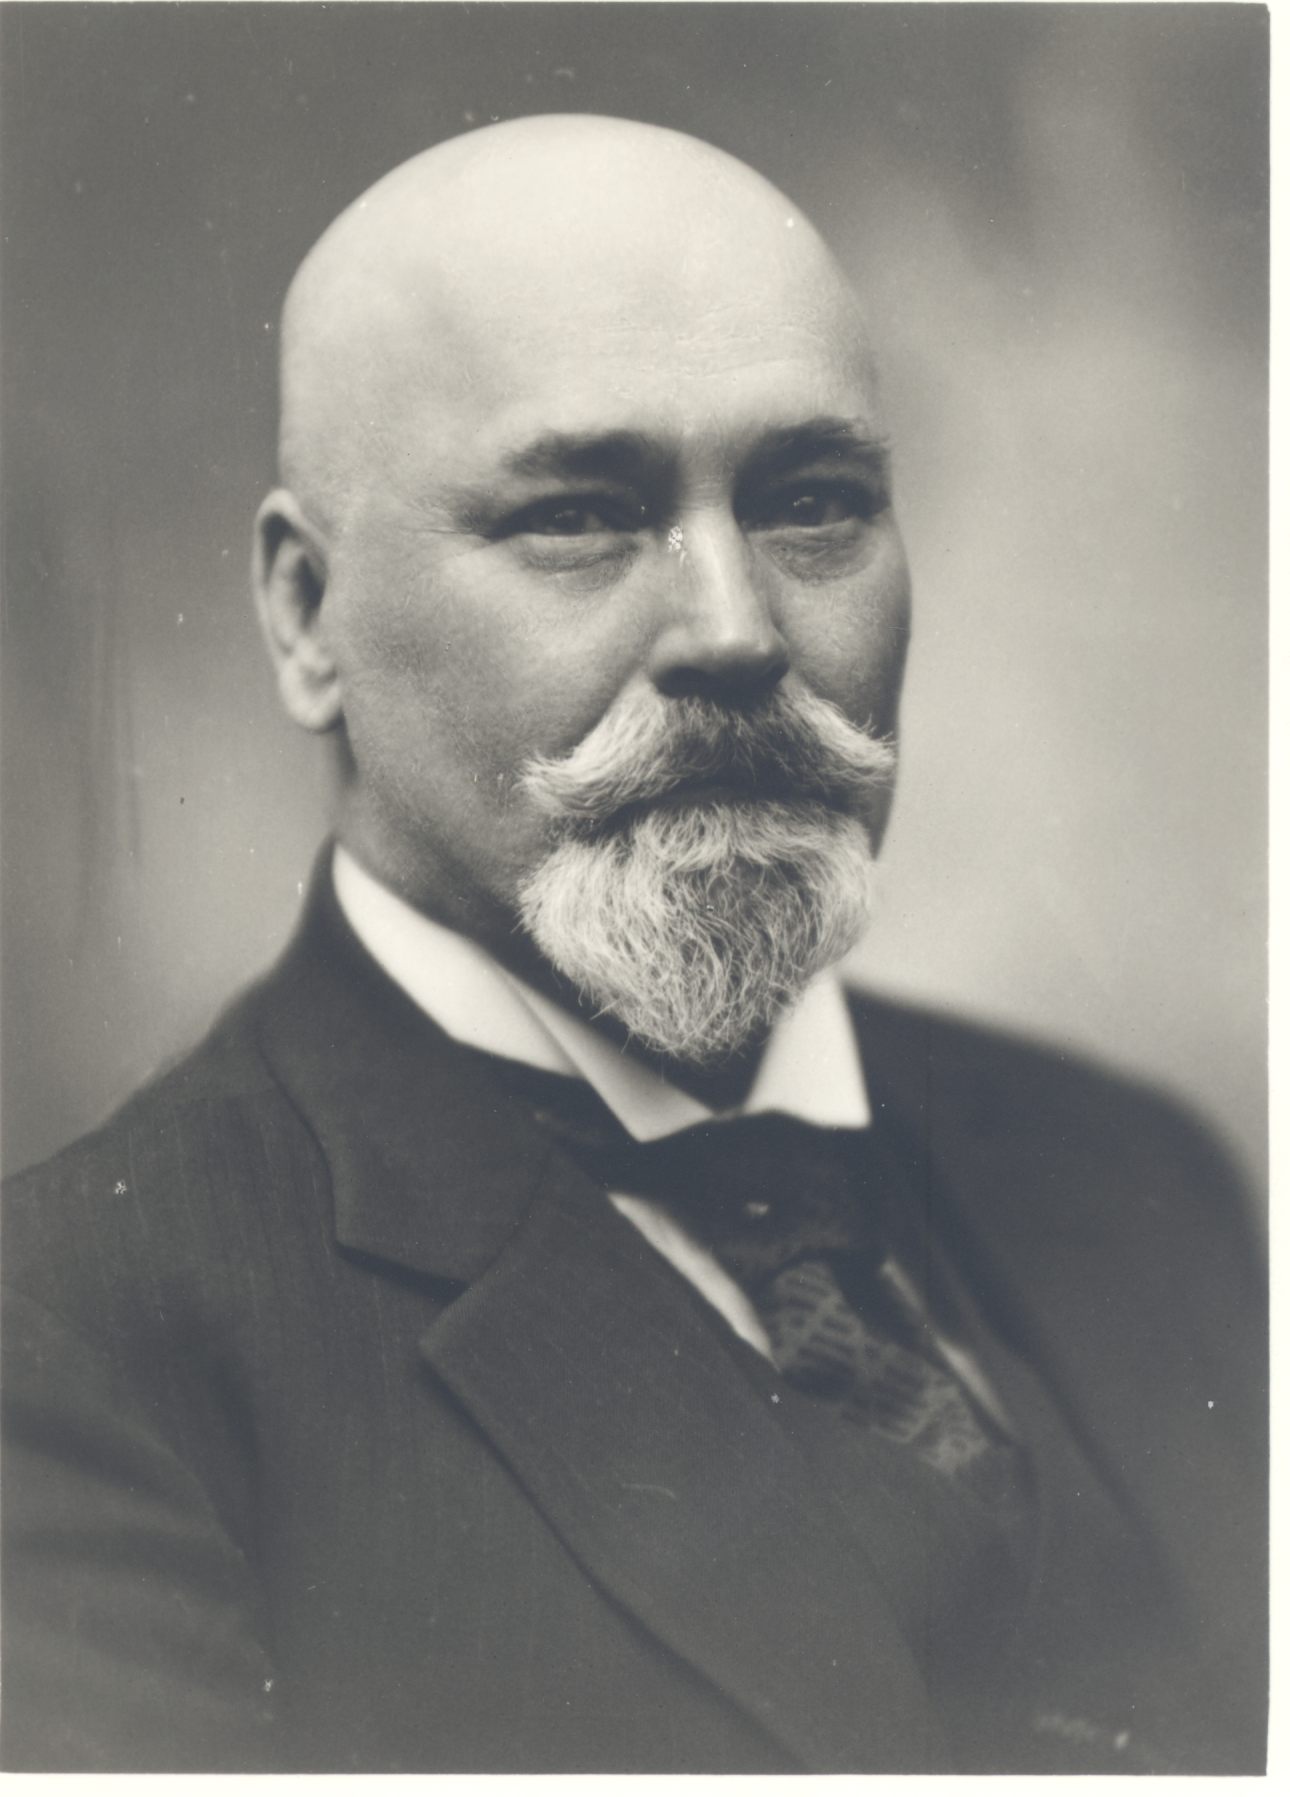 Hindrey, Karl August